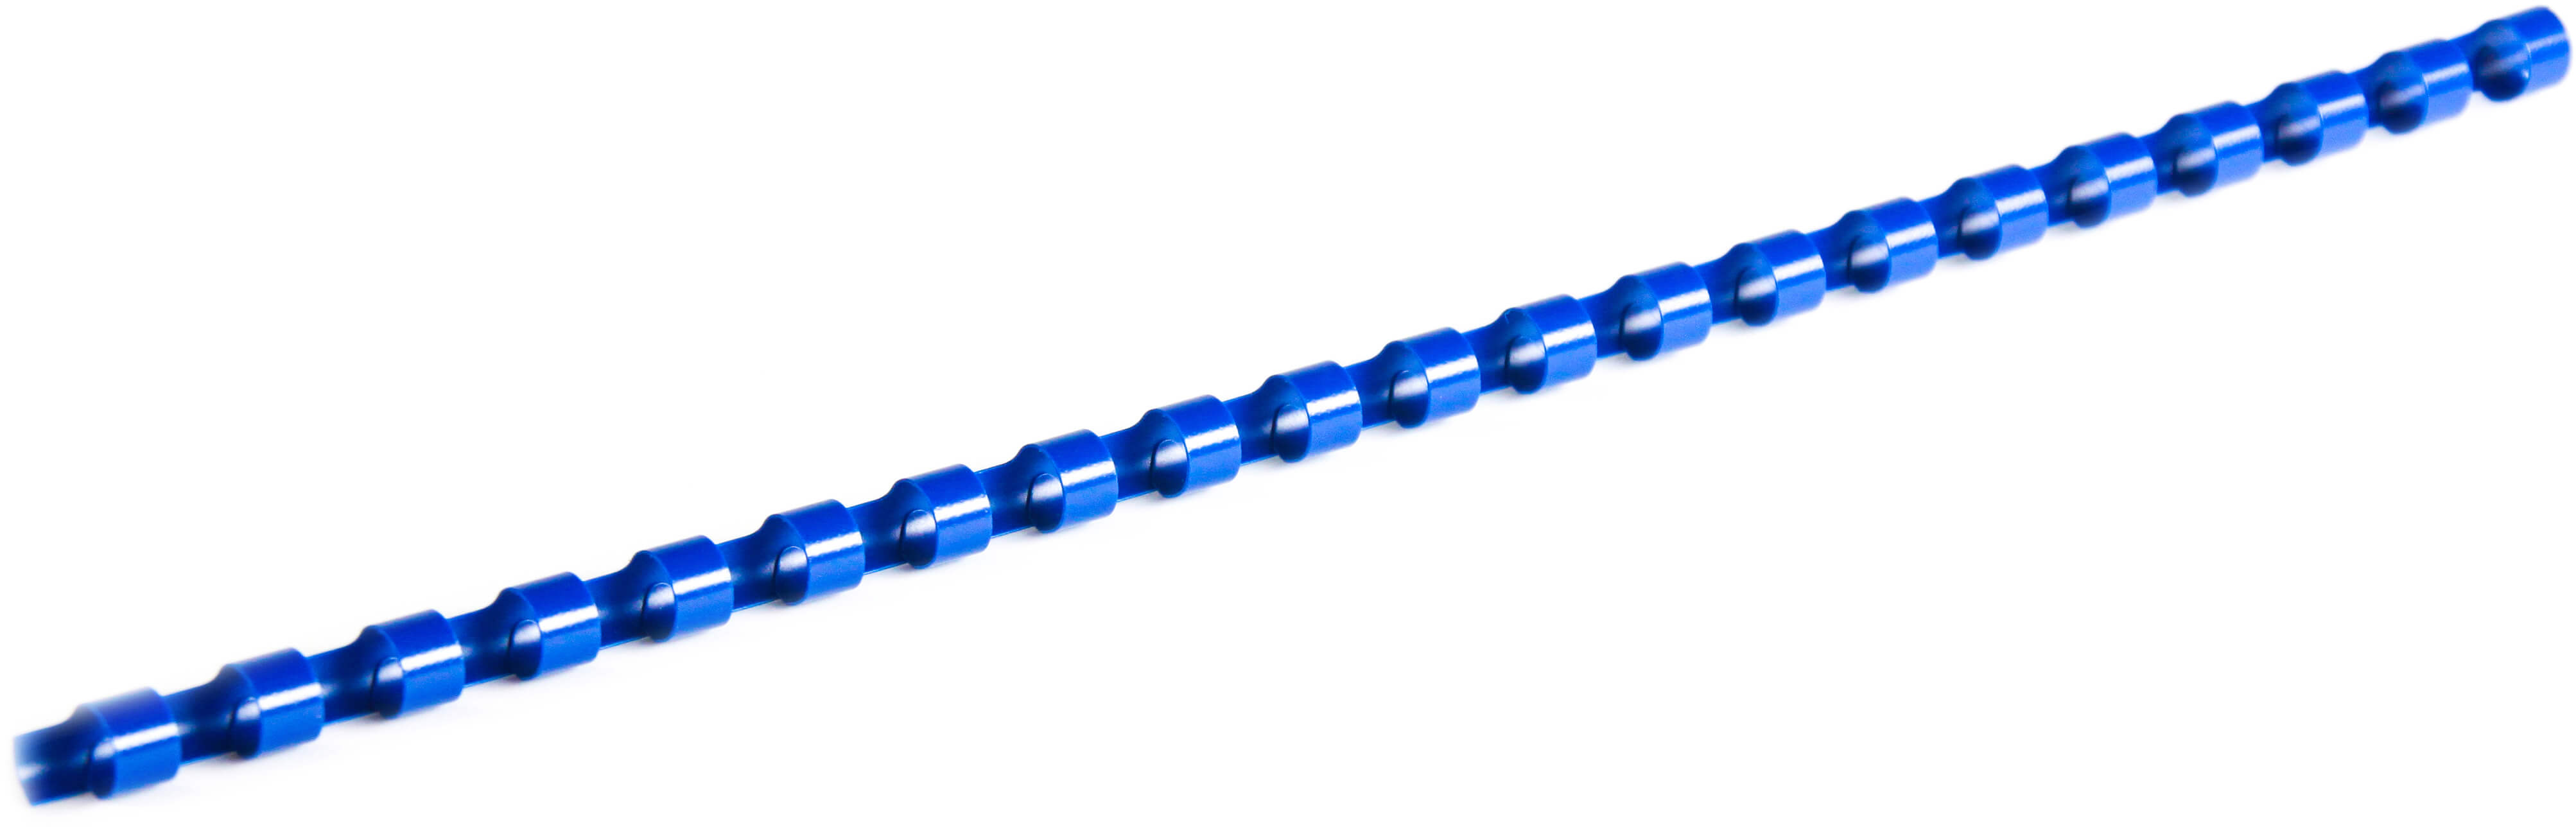 Plastikbinderücken 21 Ringe 6mm blau (100 Stück)